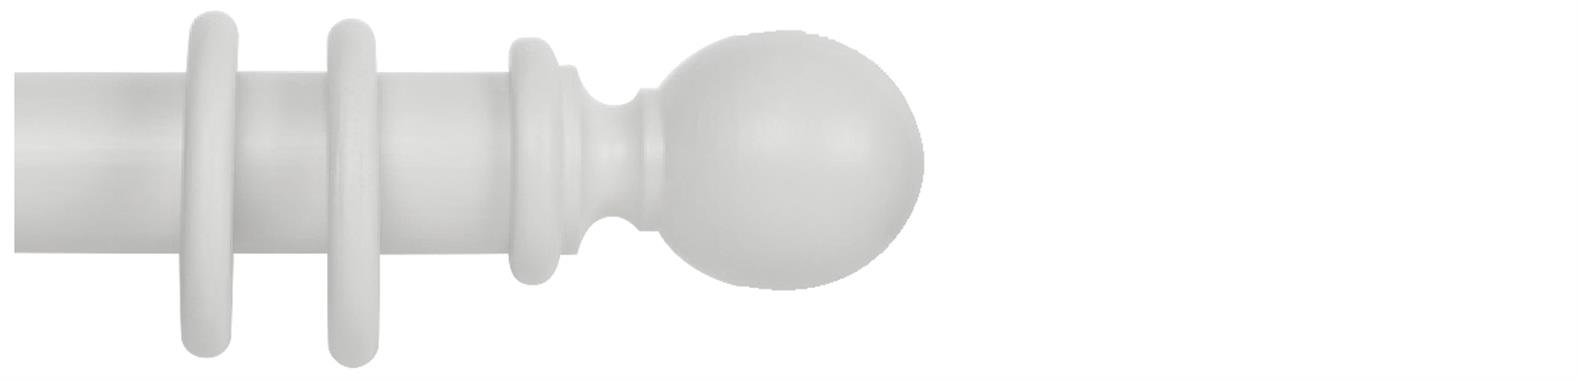 Cameron Fuller 50mm Pole White Ball